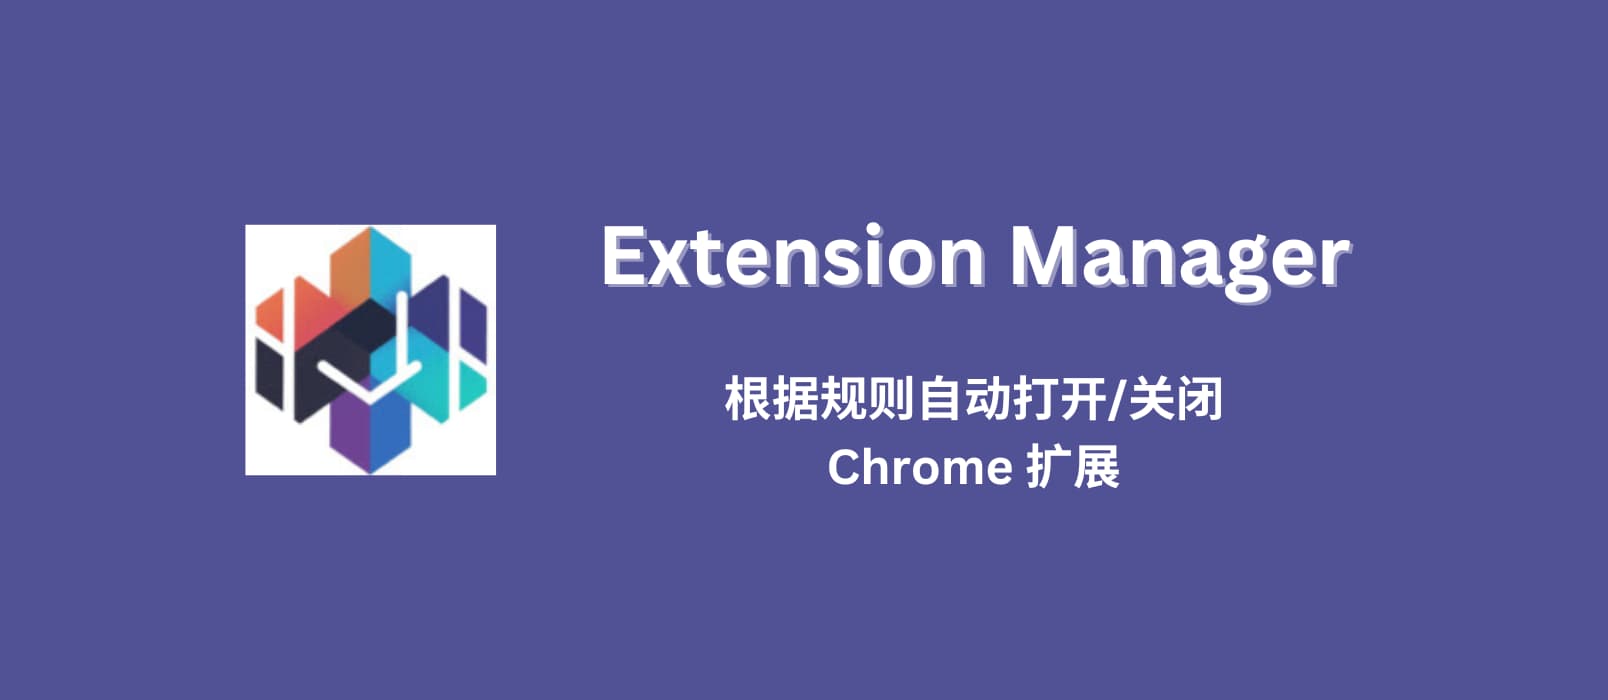 Extension Manager - 根据规则自动打开/关闭 Chrome 扩展